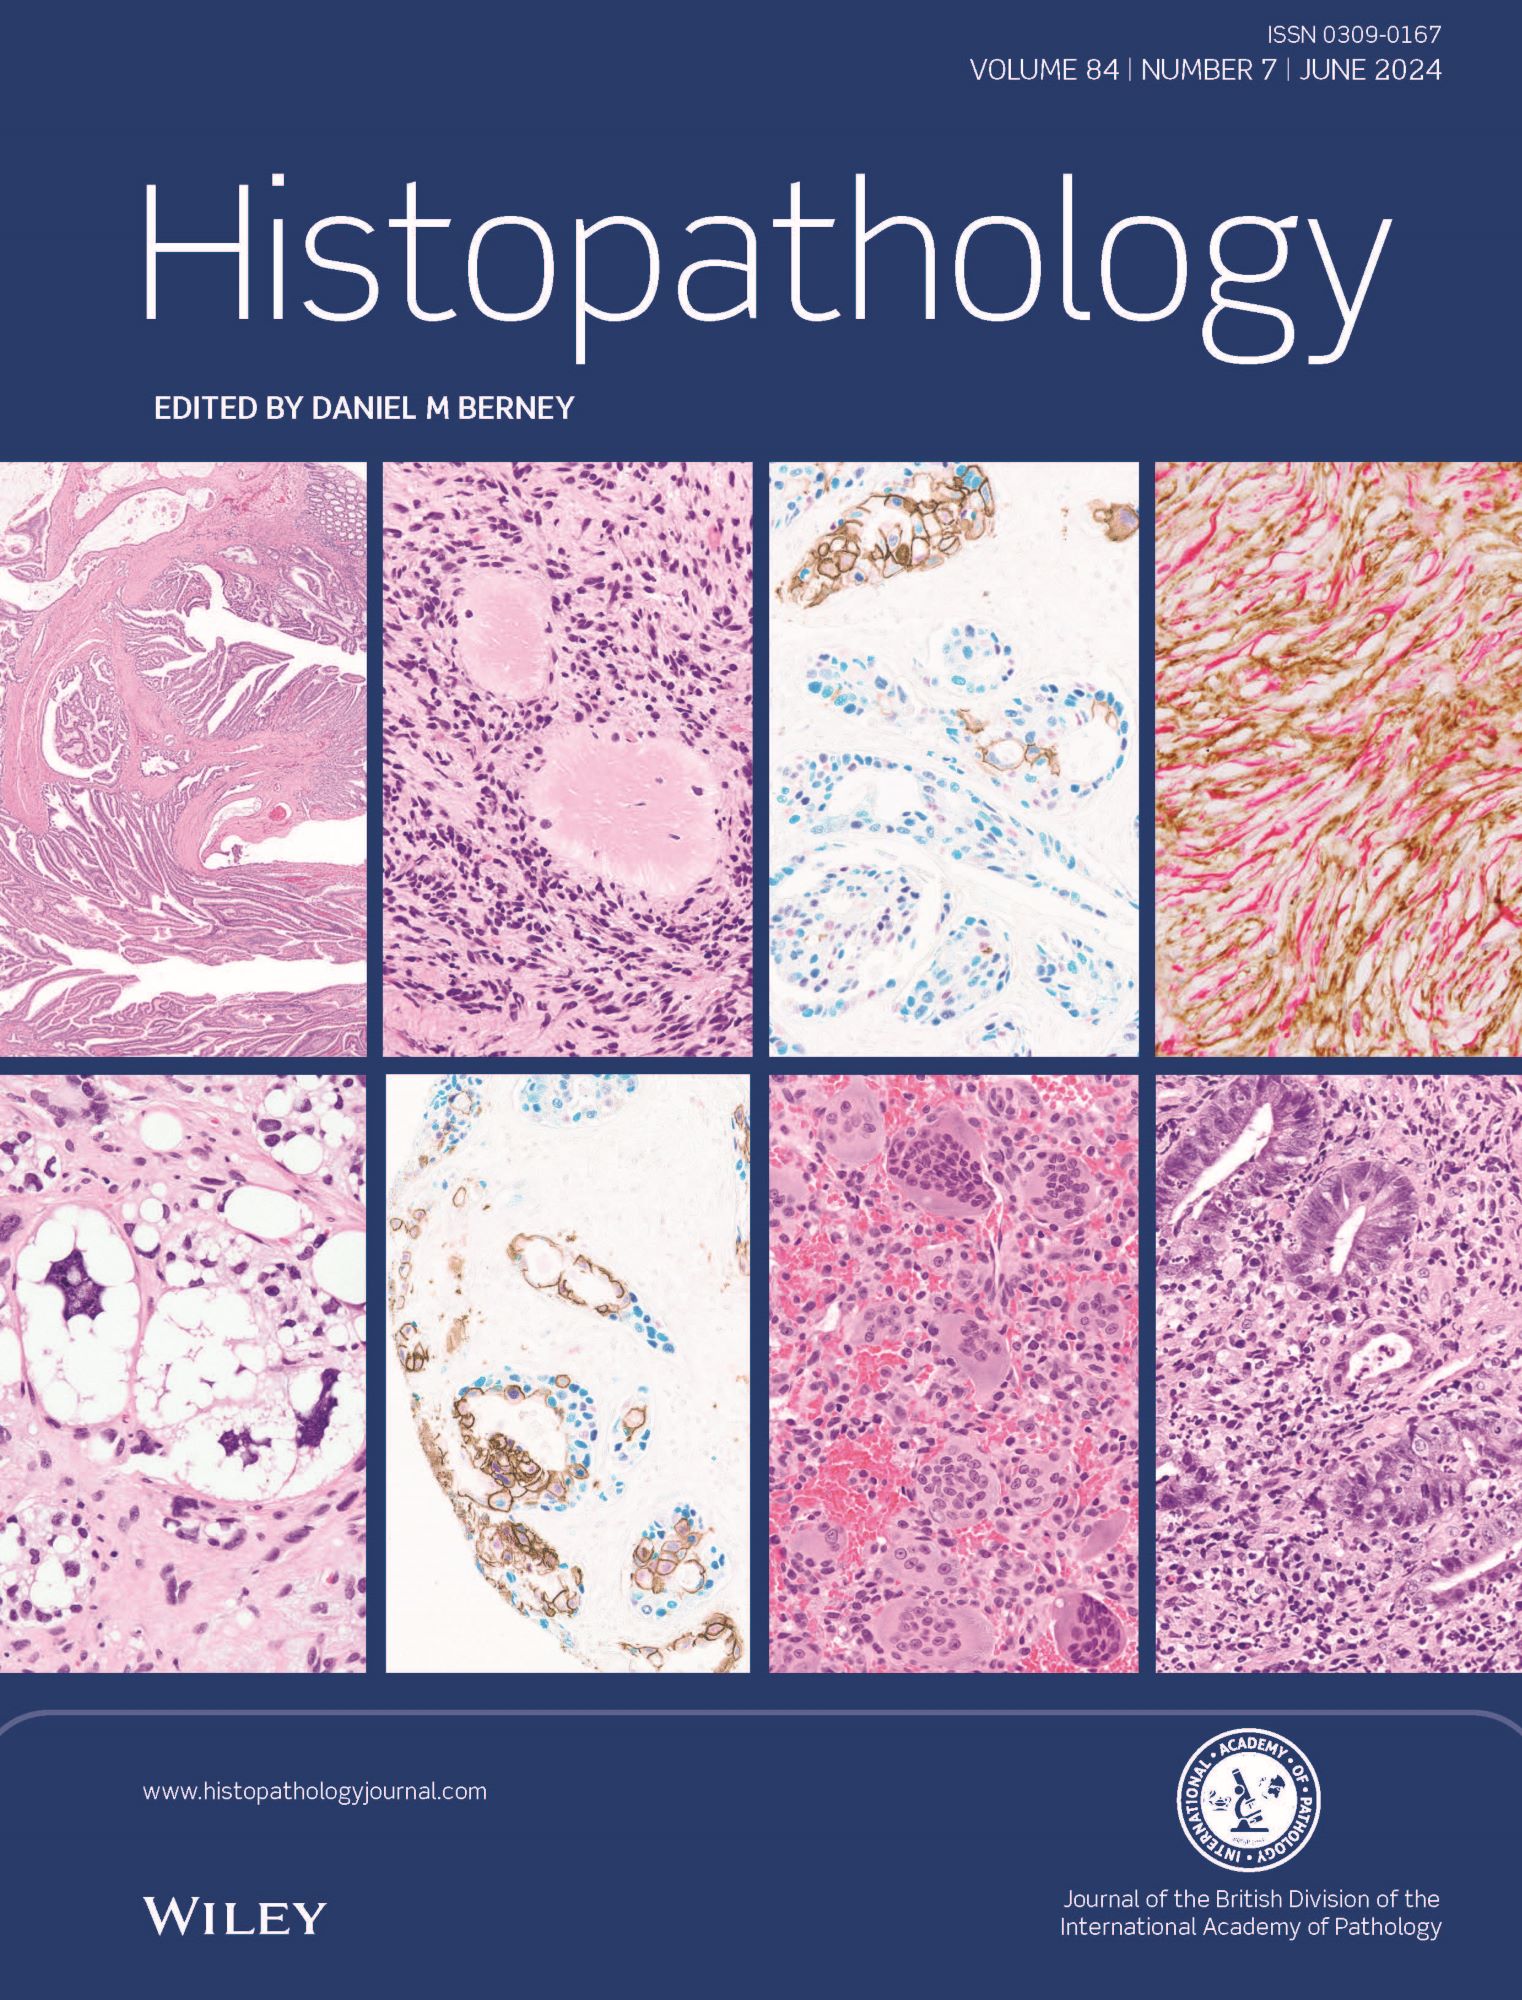 Histopathology Journal: Latest Issue Now Available image